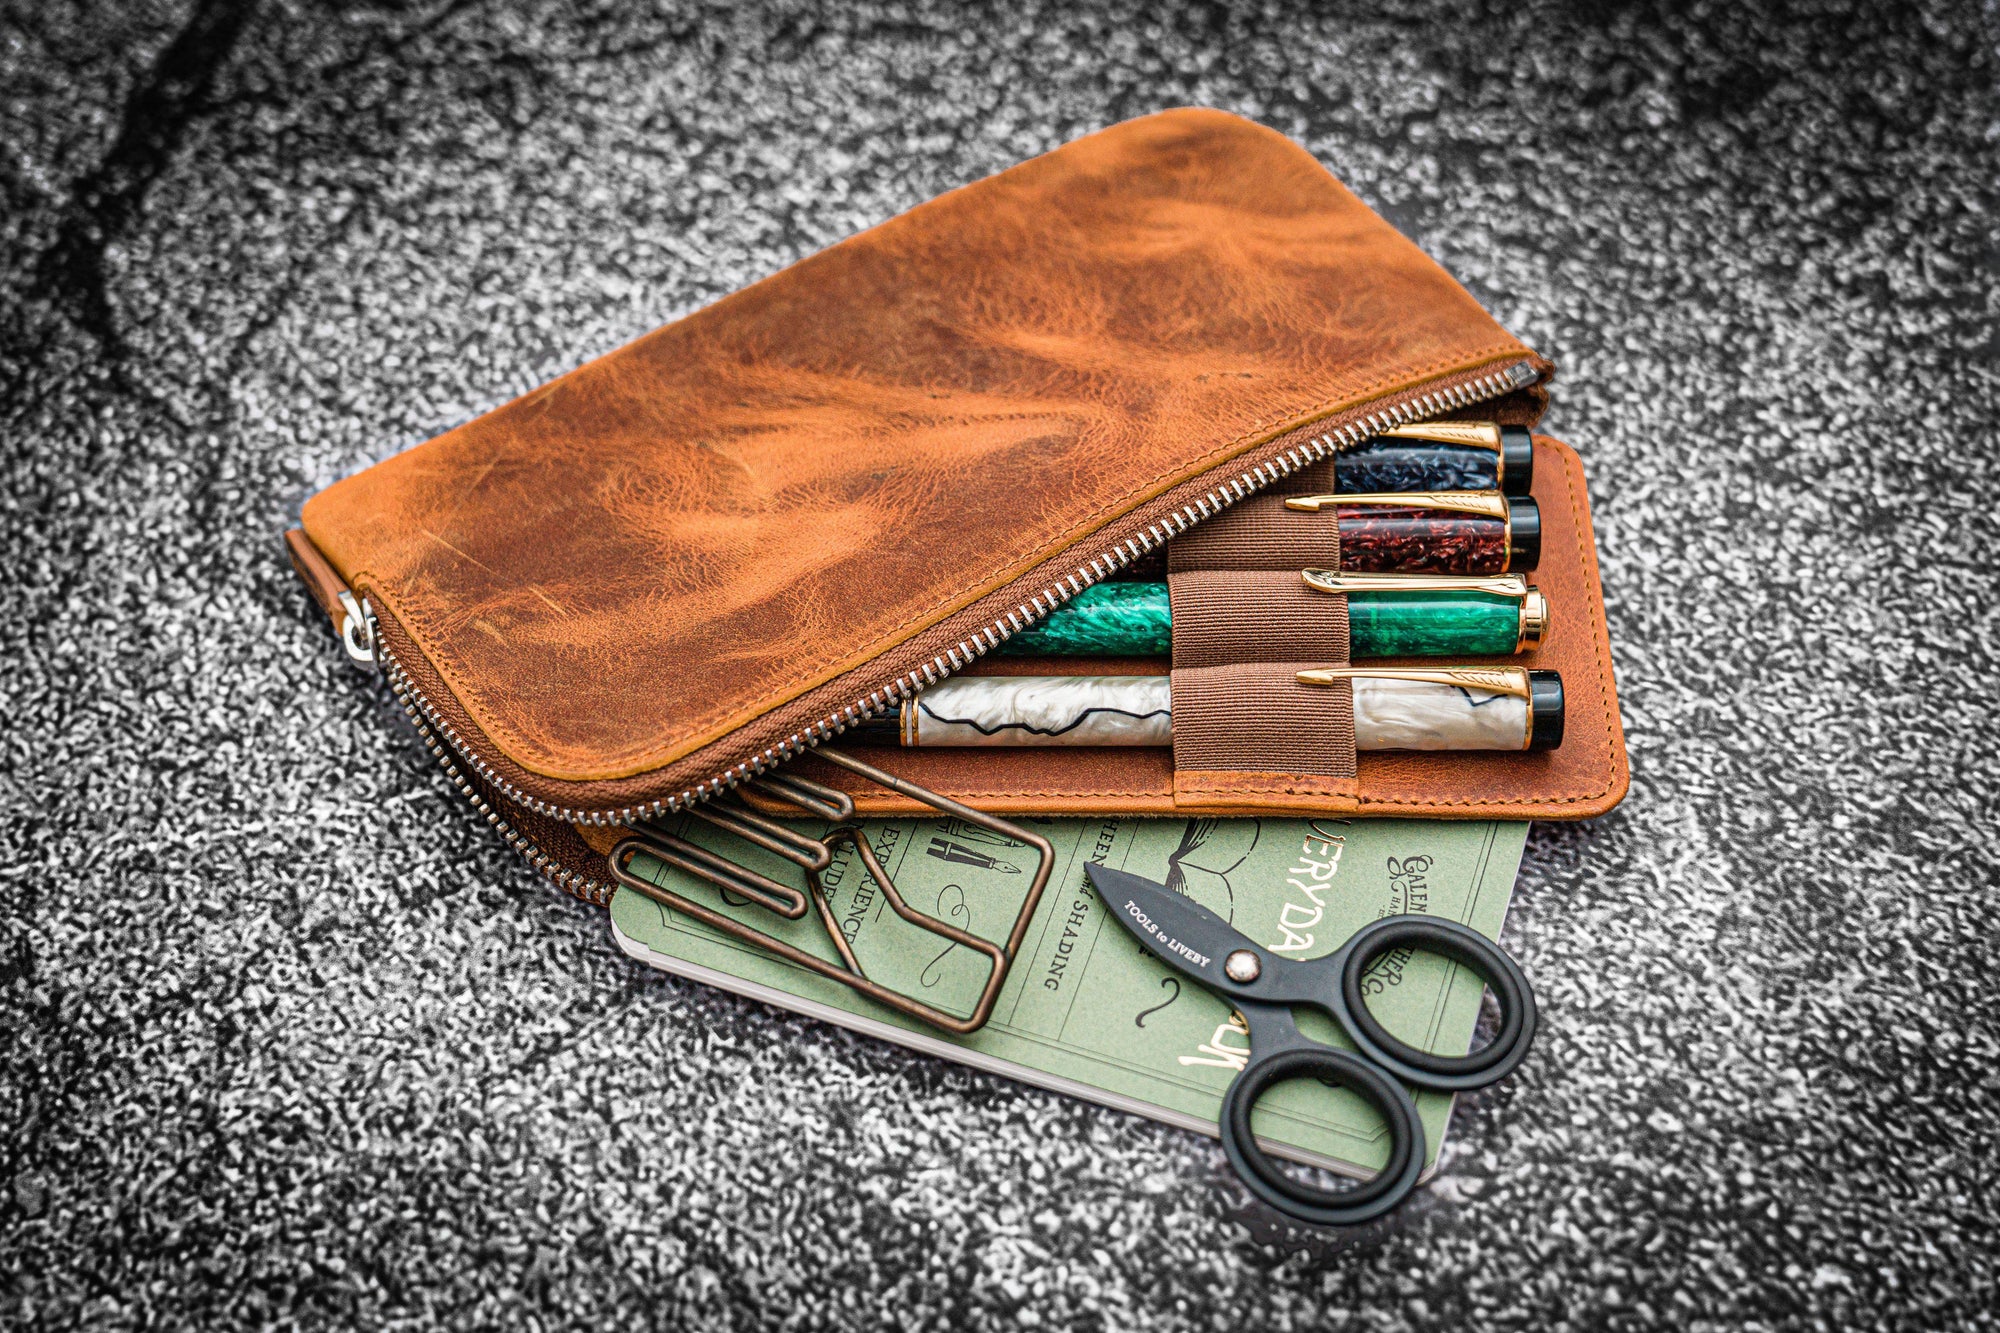 Leather pencil case “Felix” at